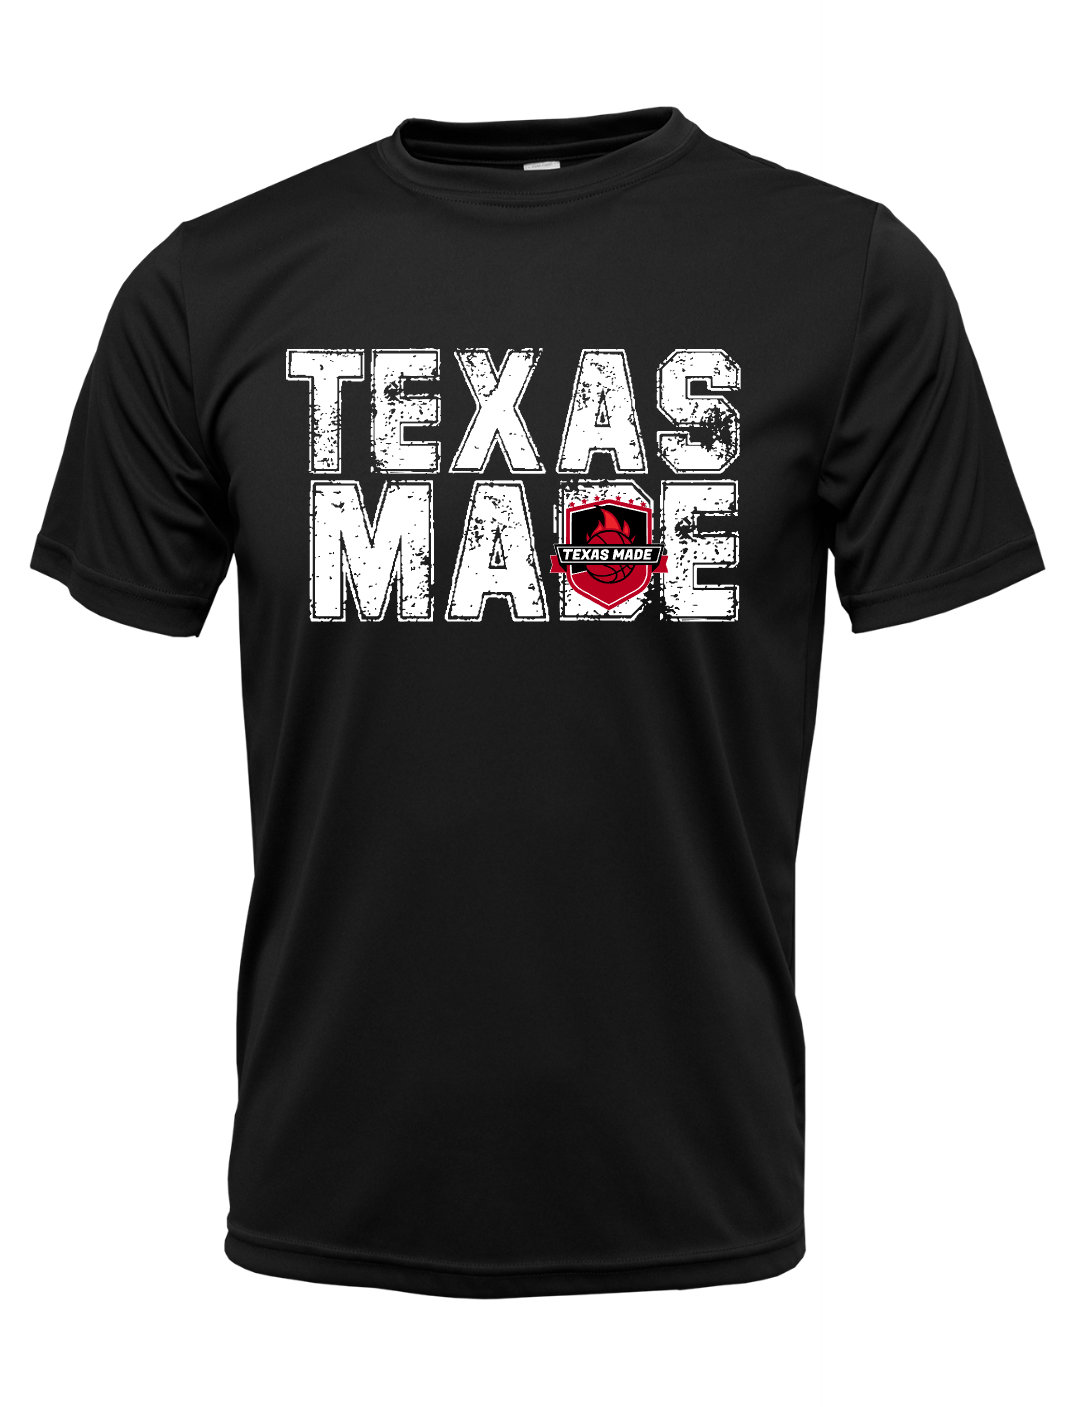 Texas Made - TEXAS MADE - Black Performance Tee